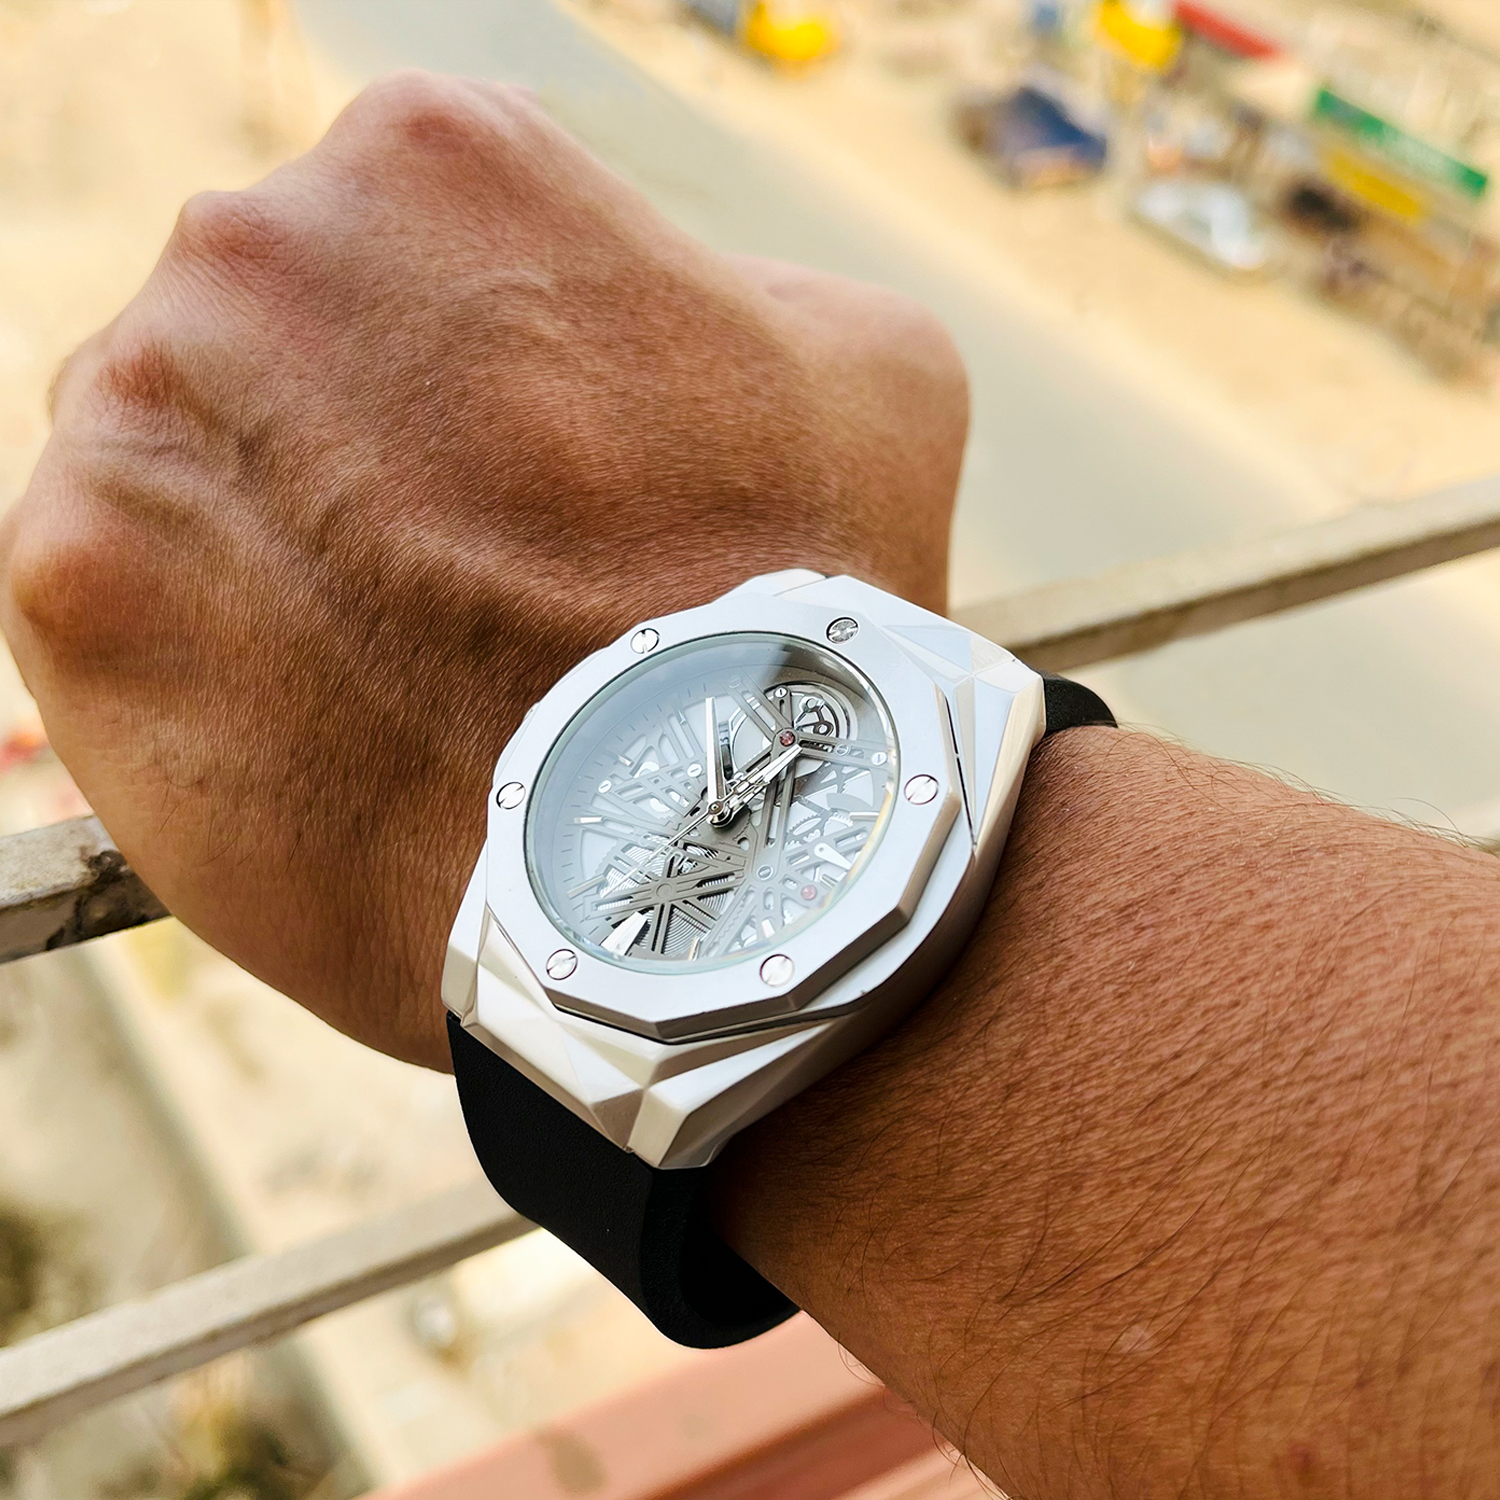 HBLT Premium Big Dial Men's Wrist Watch